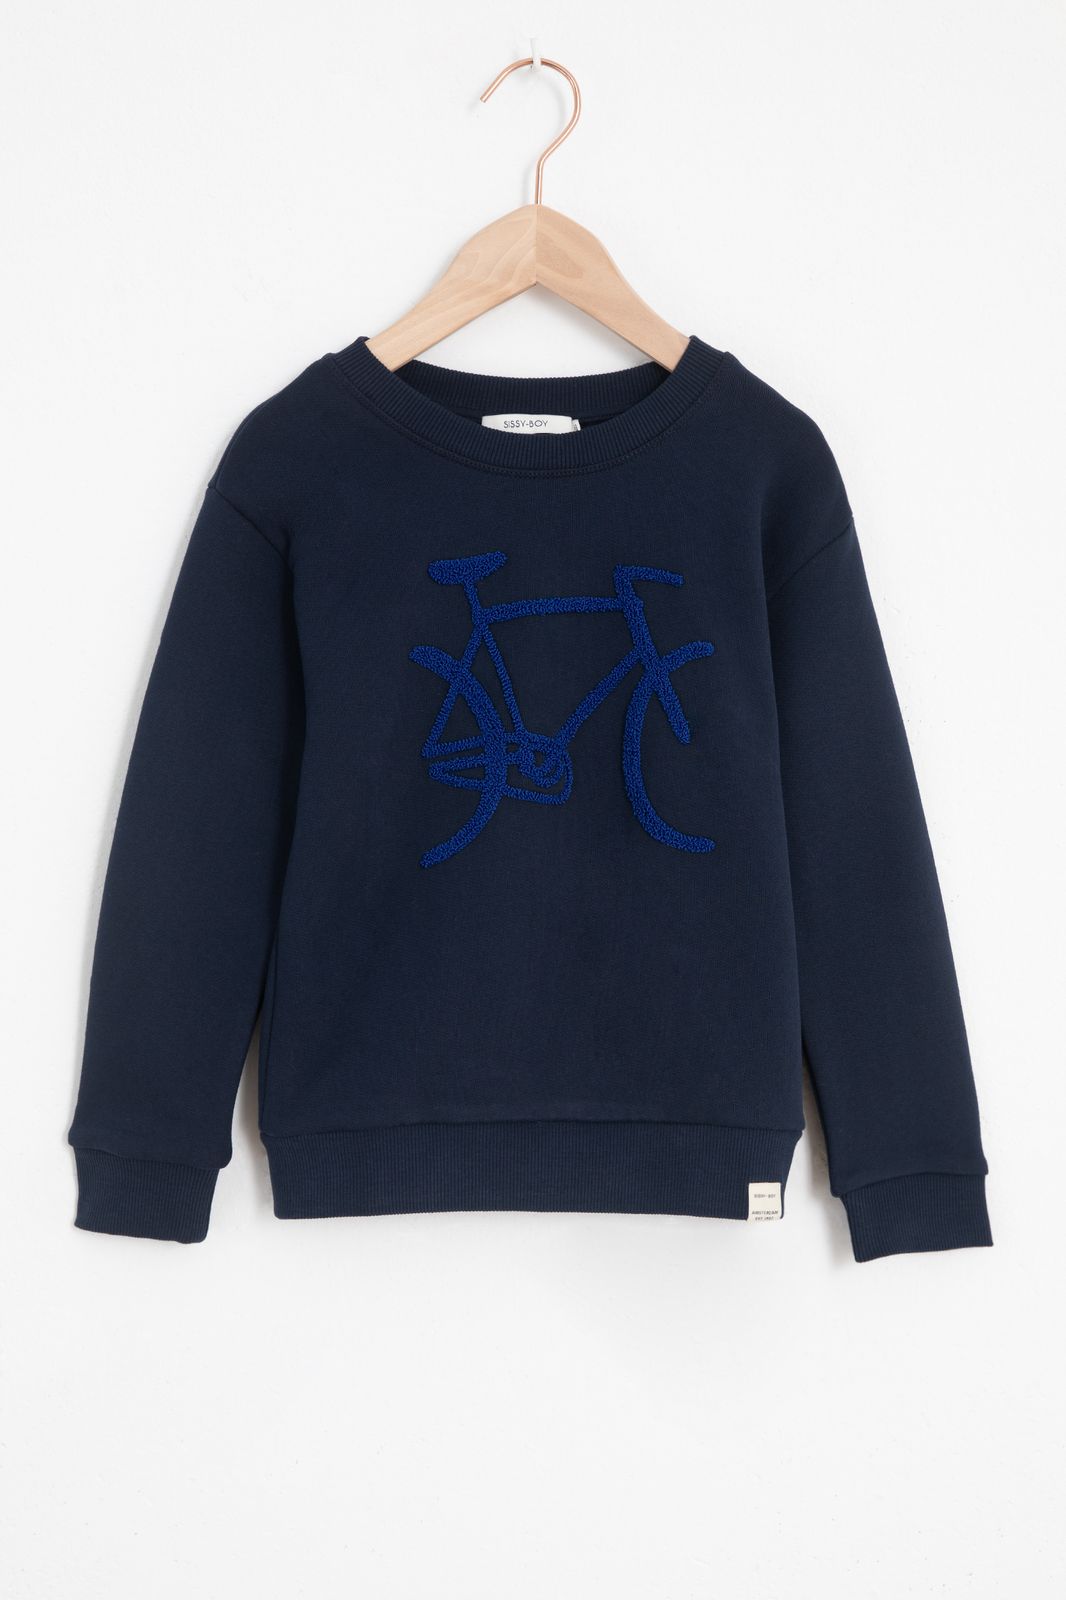 Sweater mit Fahrrad-Print - dunkelblau